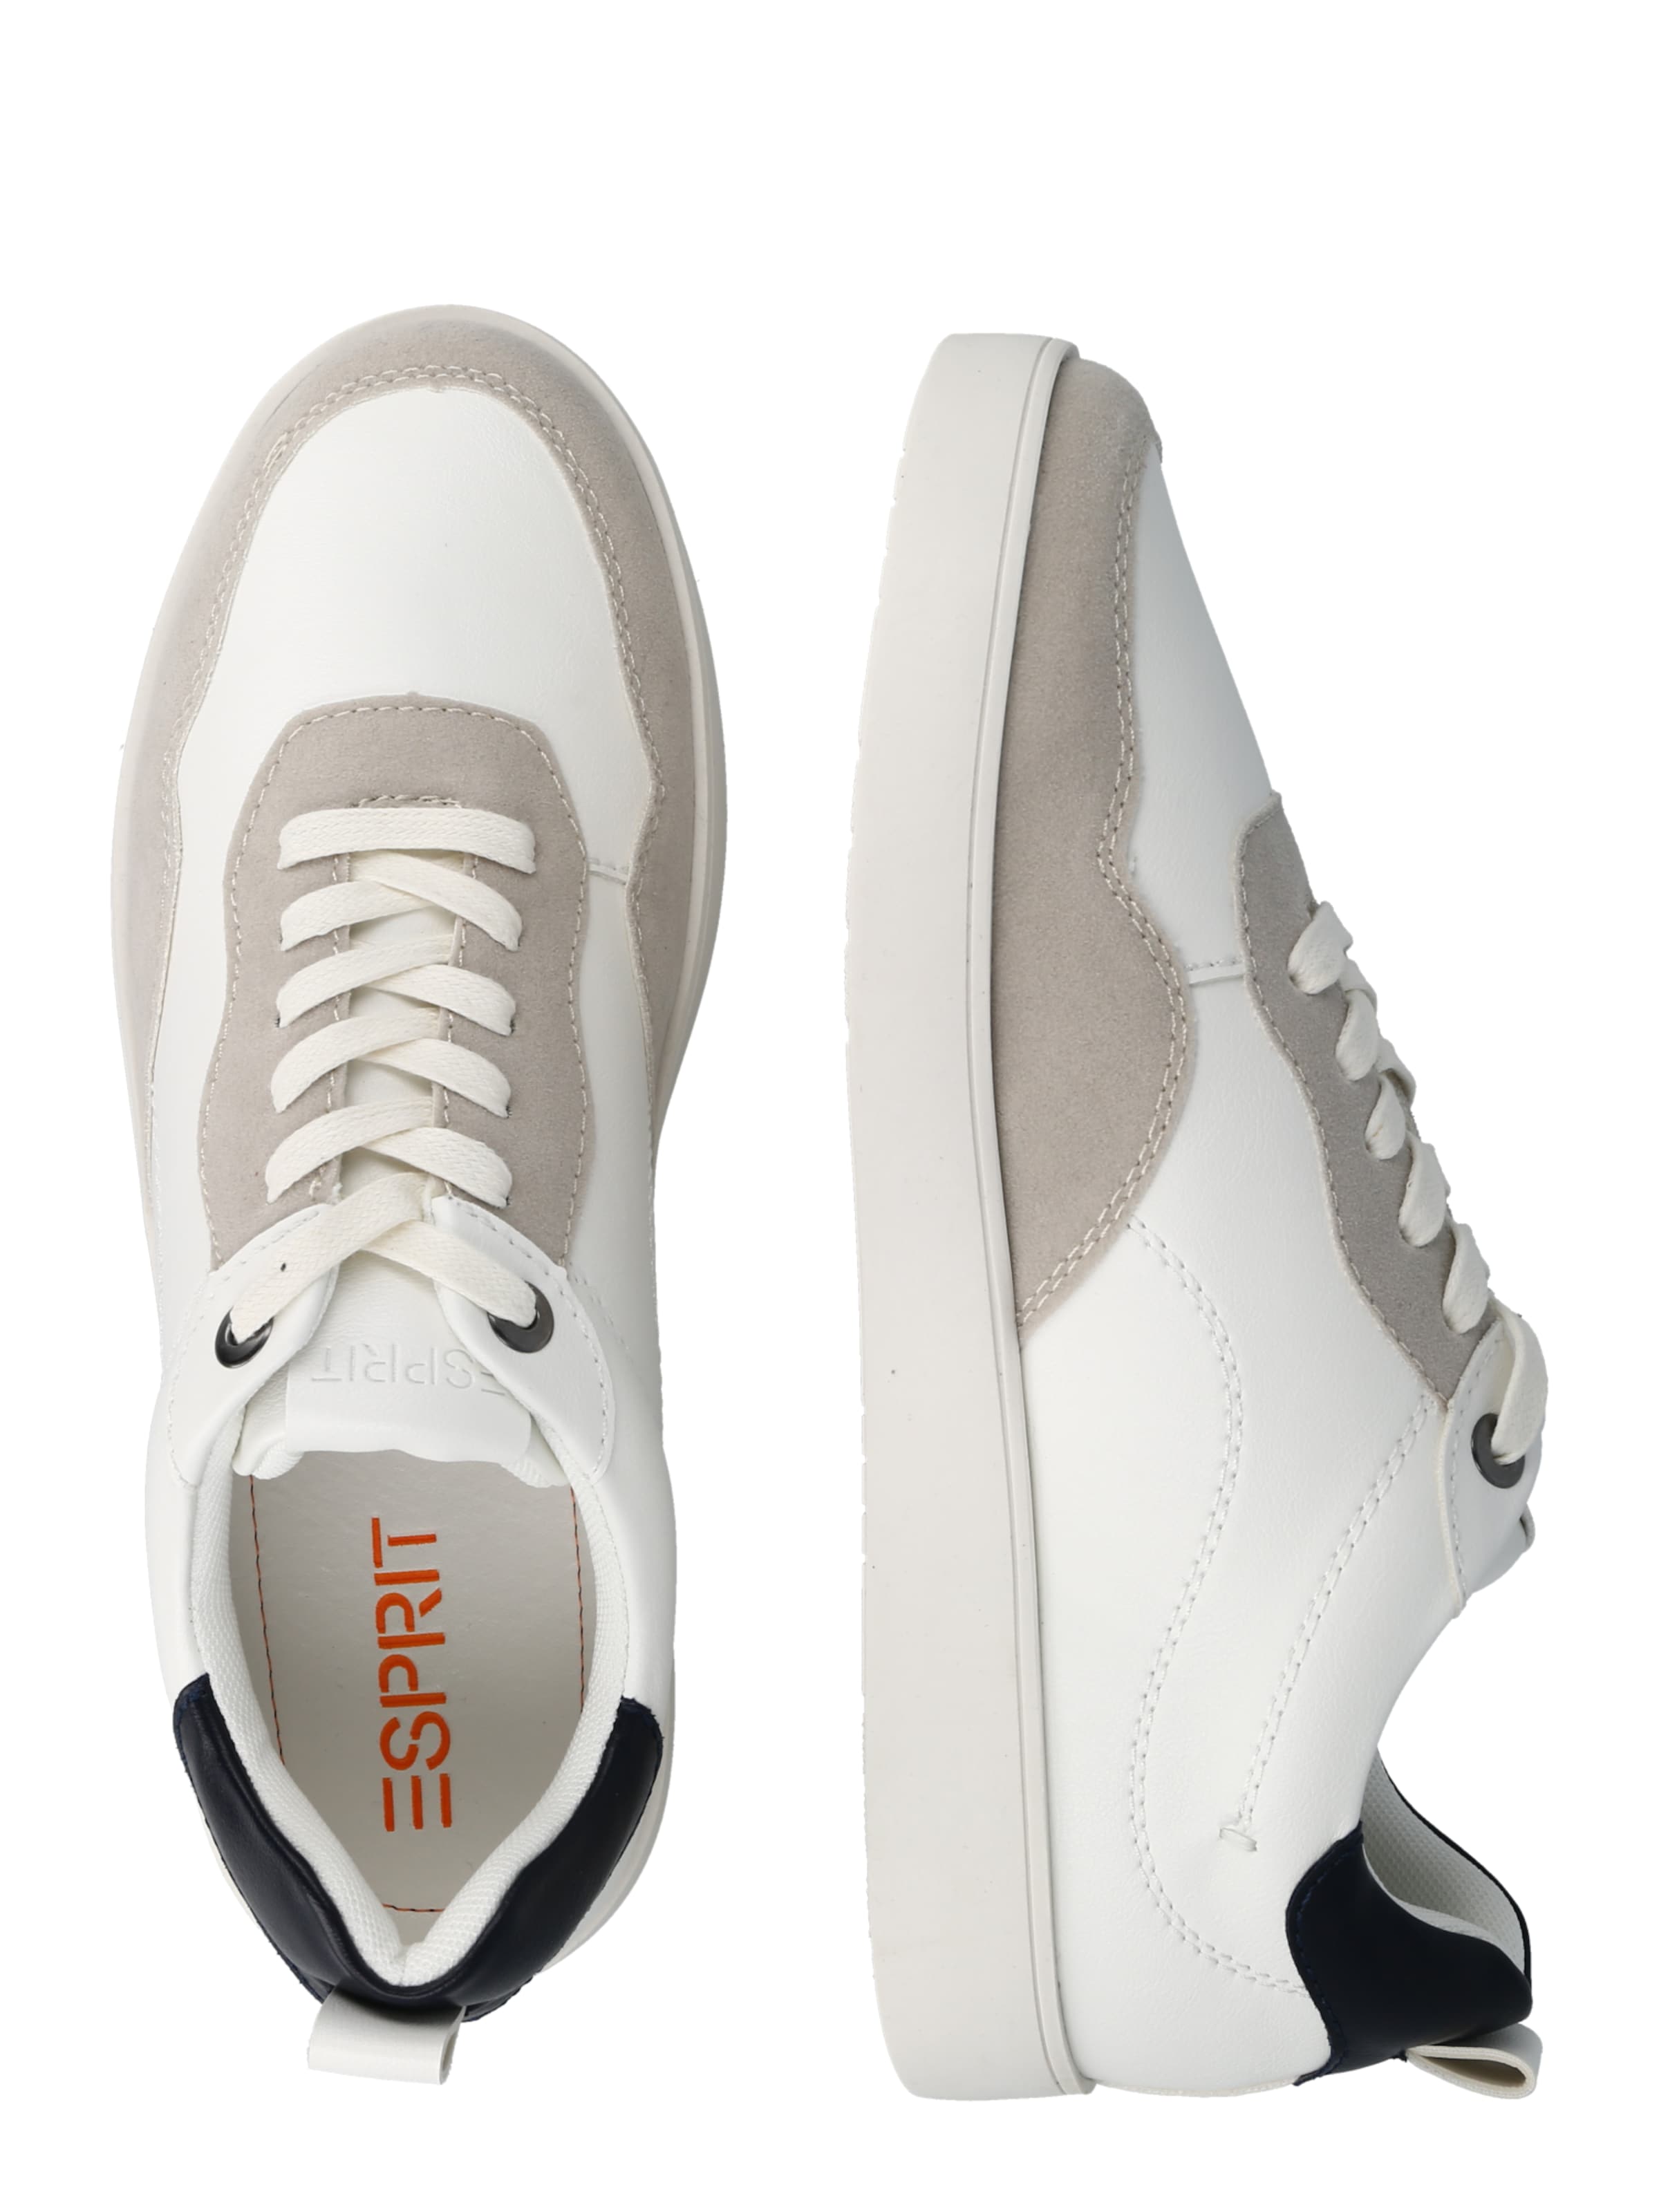 Men Sneakers | ESPRIT Sneakers in Off White - XN85847